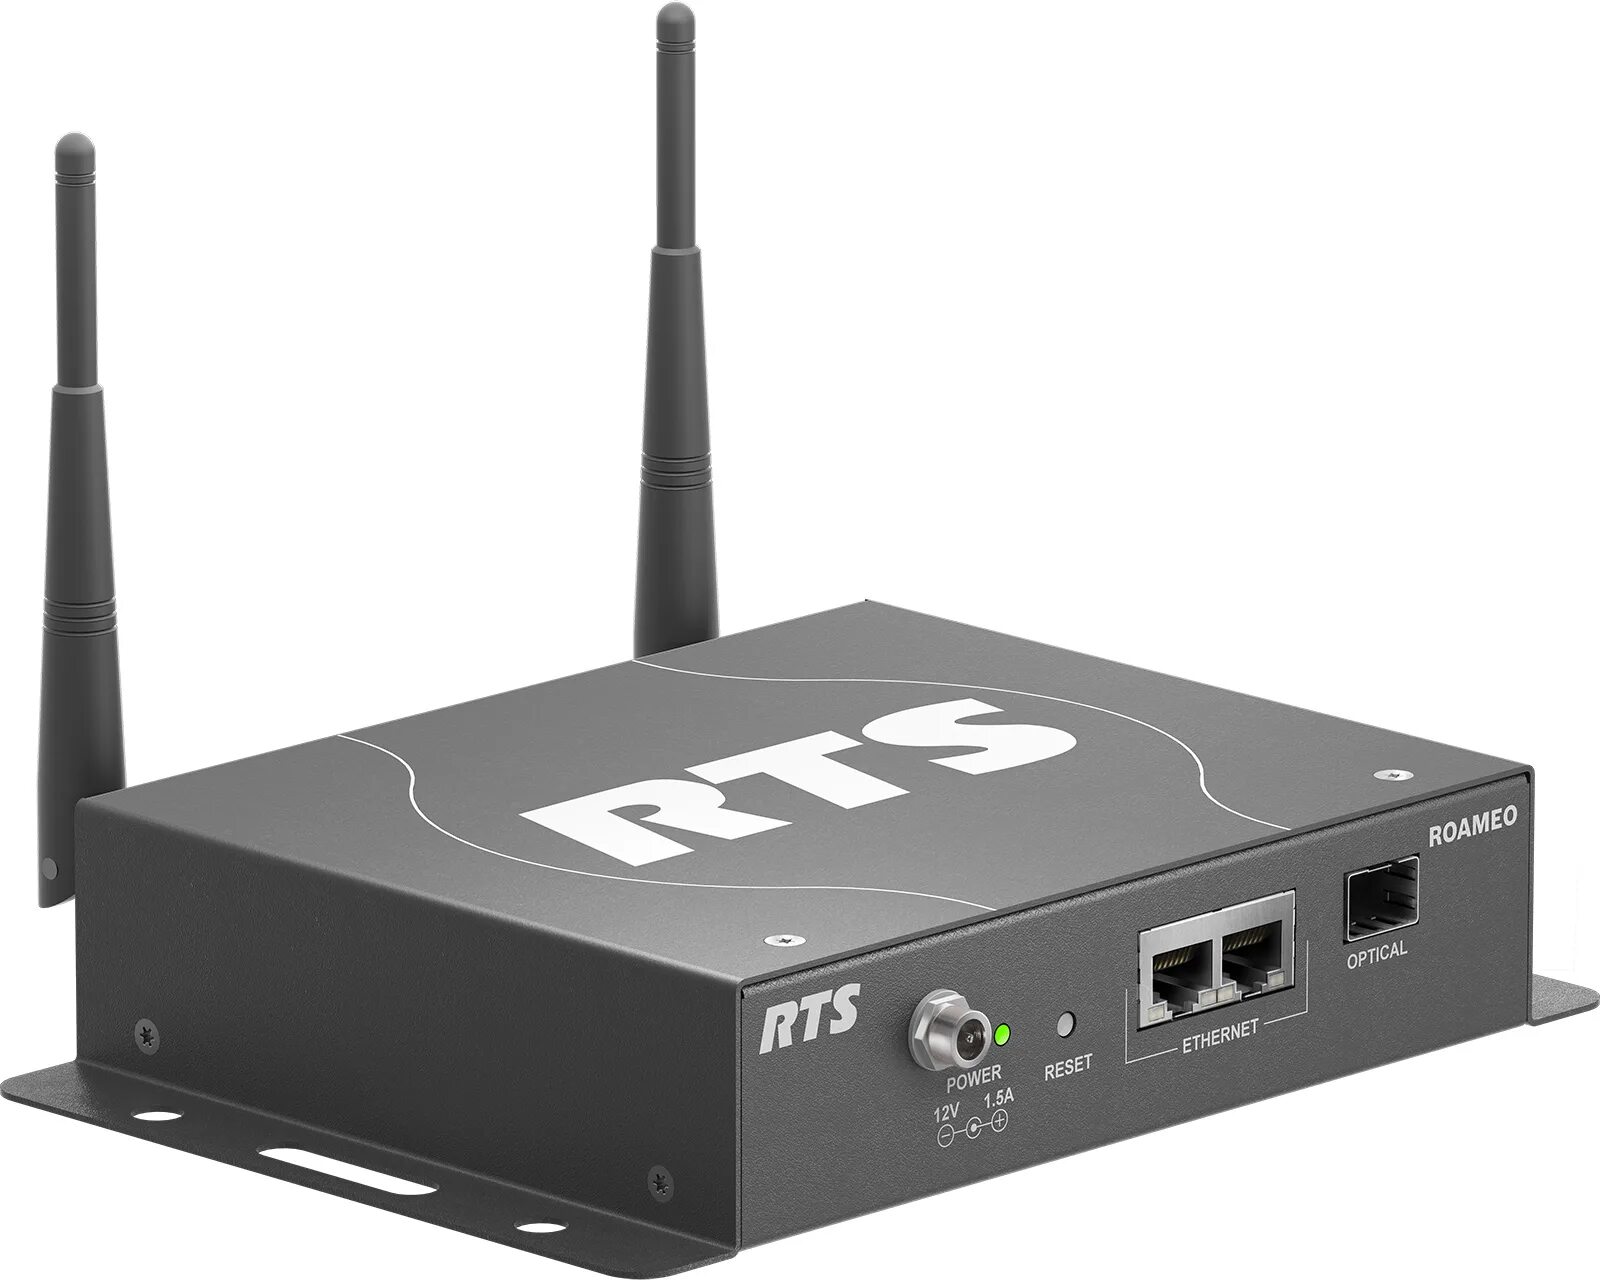 RTS AP-1800eu ROAMEO DECT. AP 1800. RTS tr-1800. Bluetooth маршрутизатор.